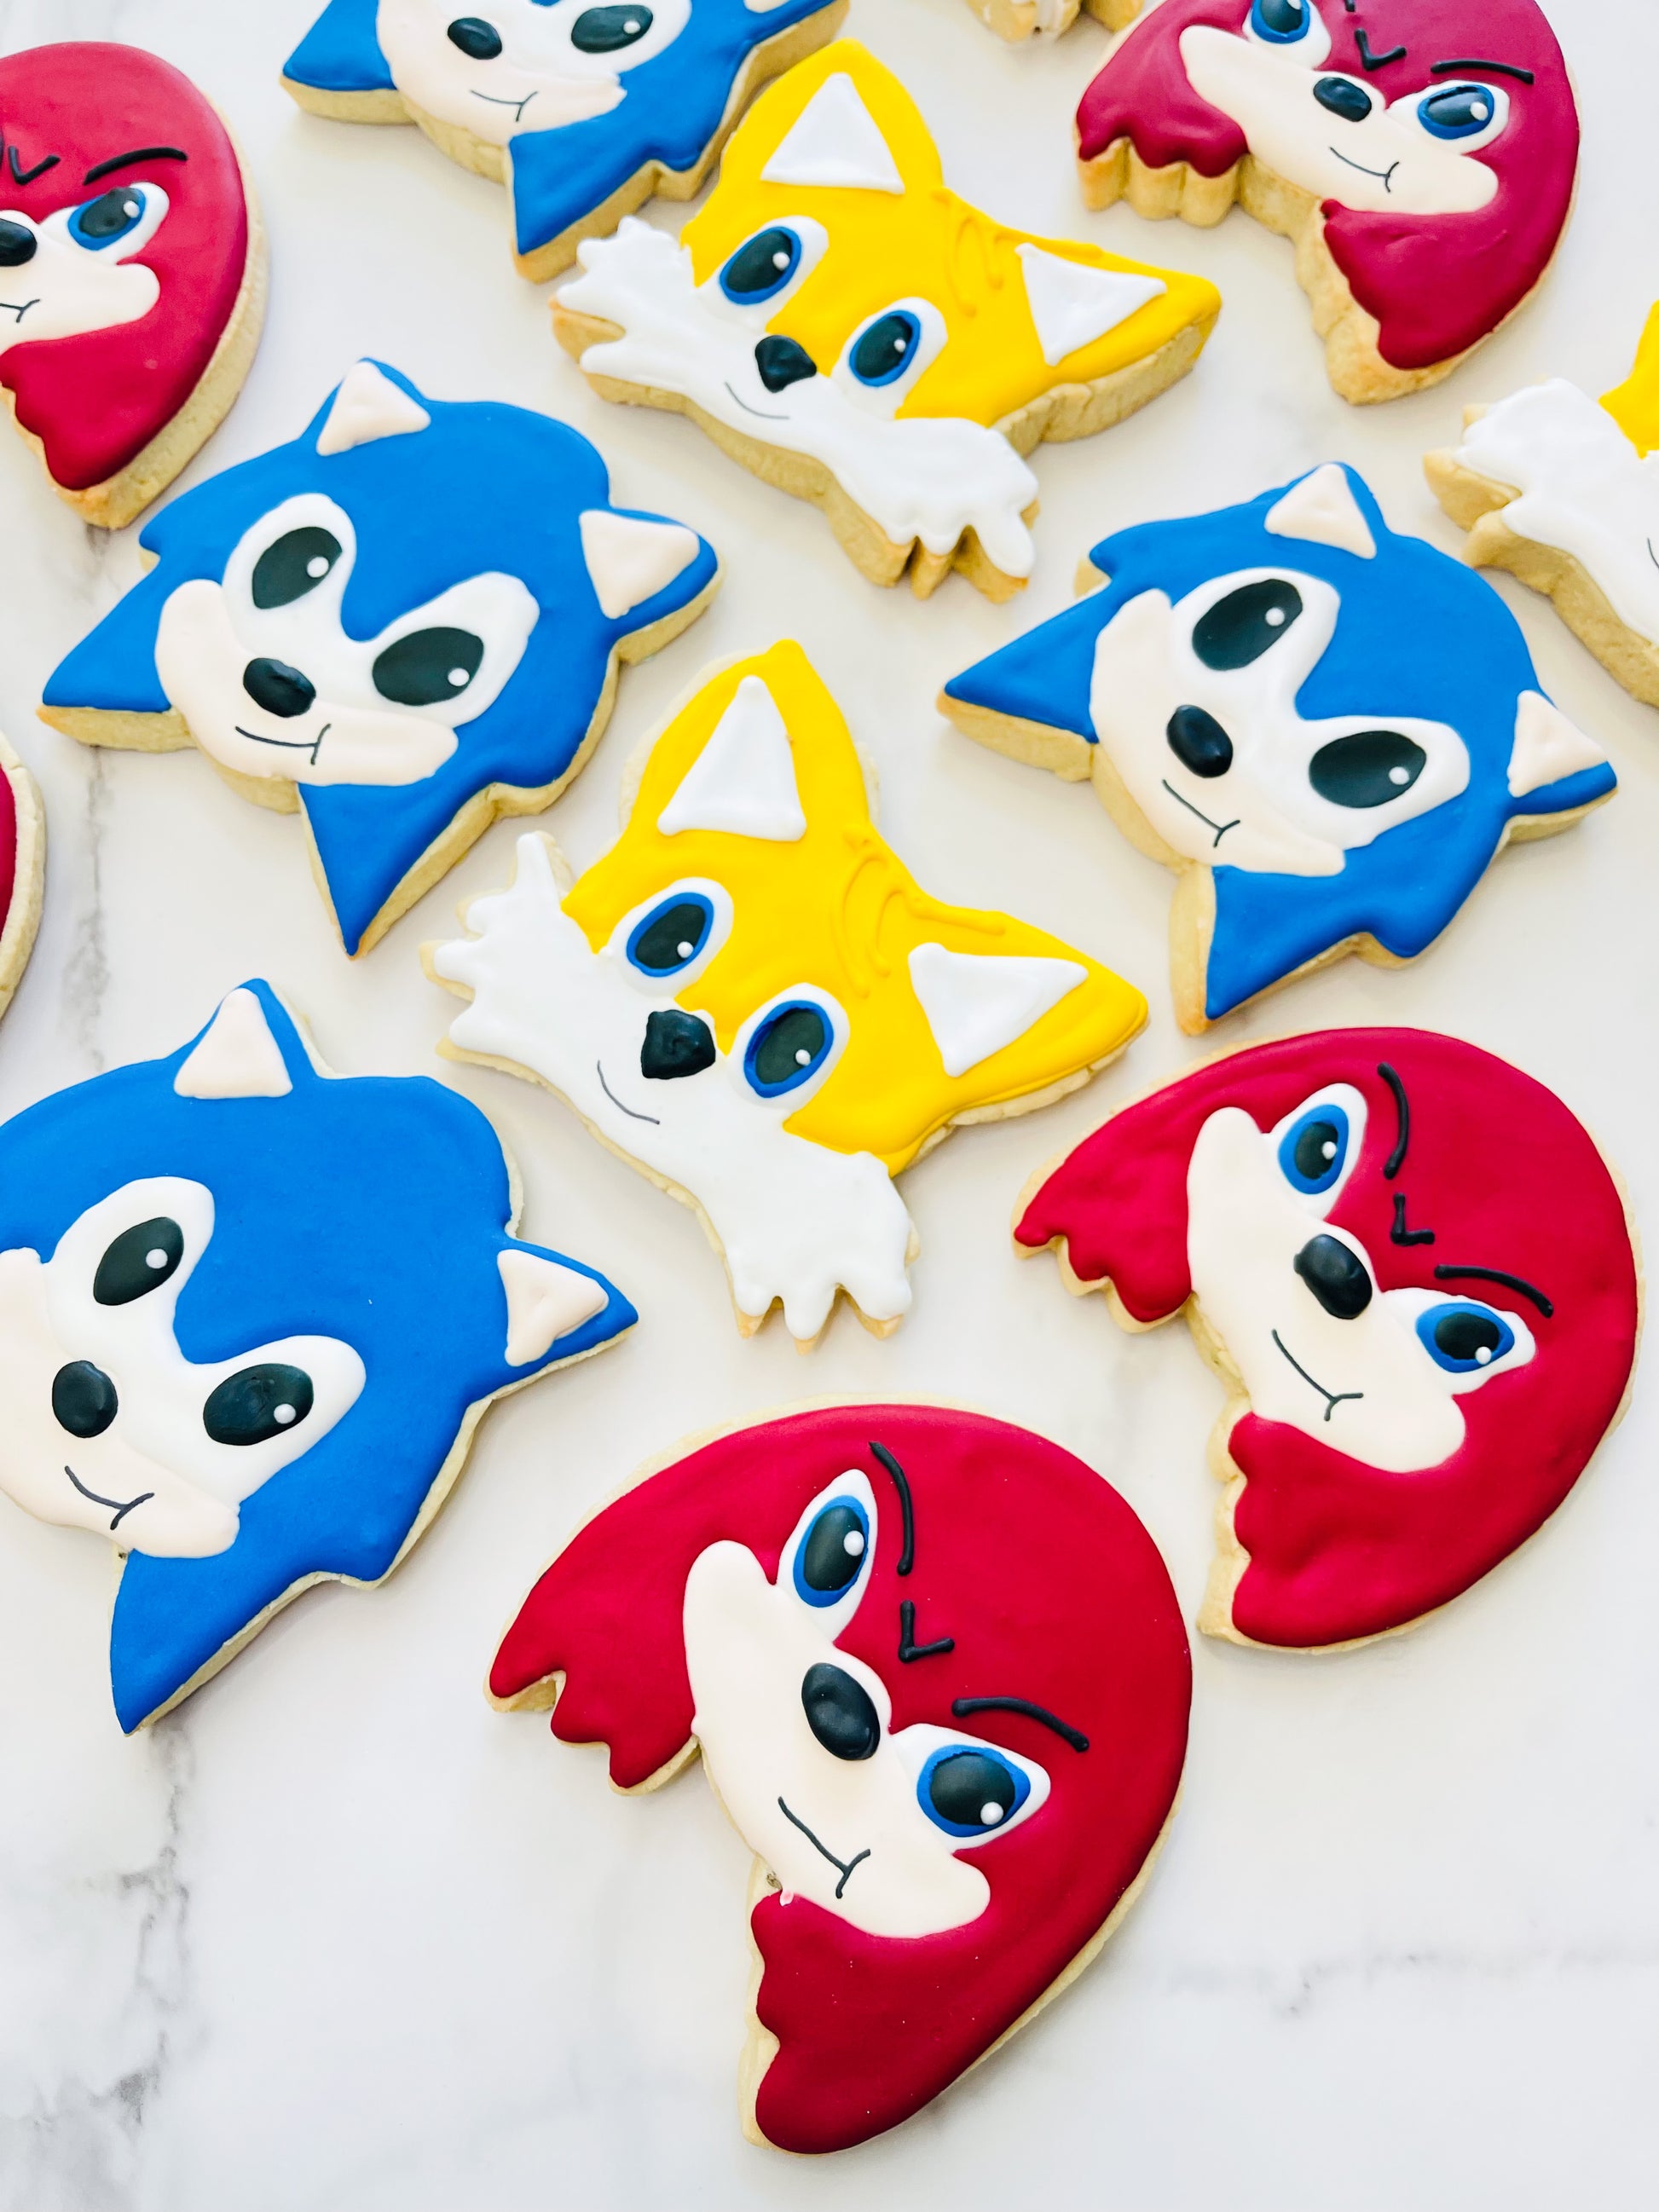 Sonic the Hedgehog (2020) is a mini-sugarfree vanilla cupcake